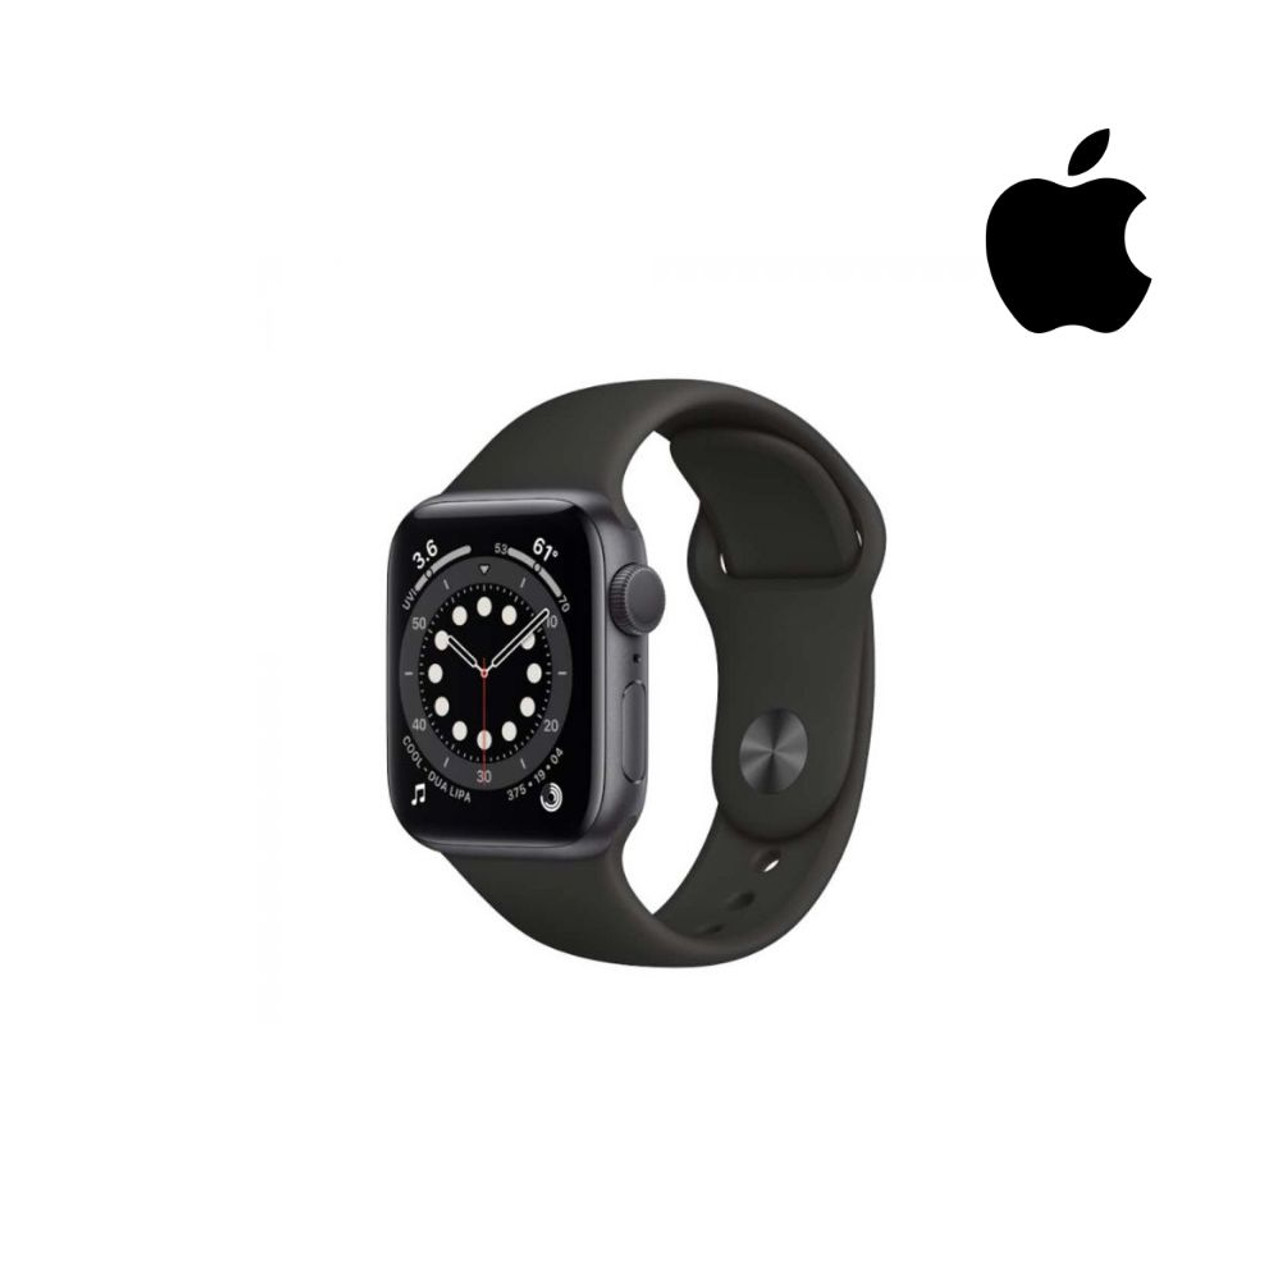 Apple® Watch Series 6